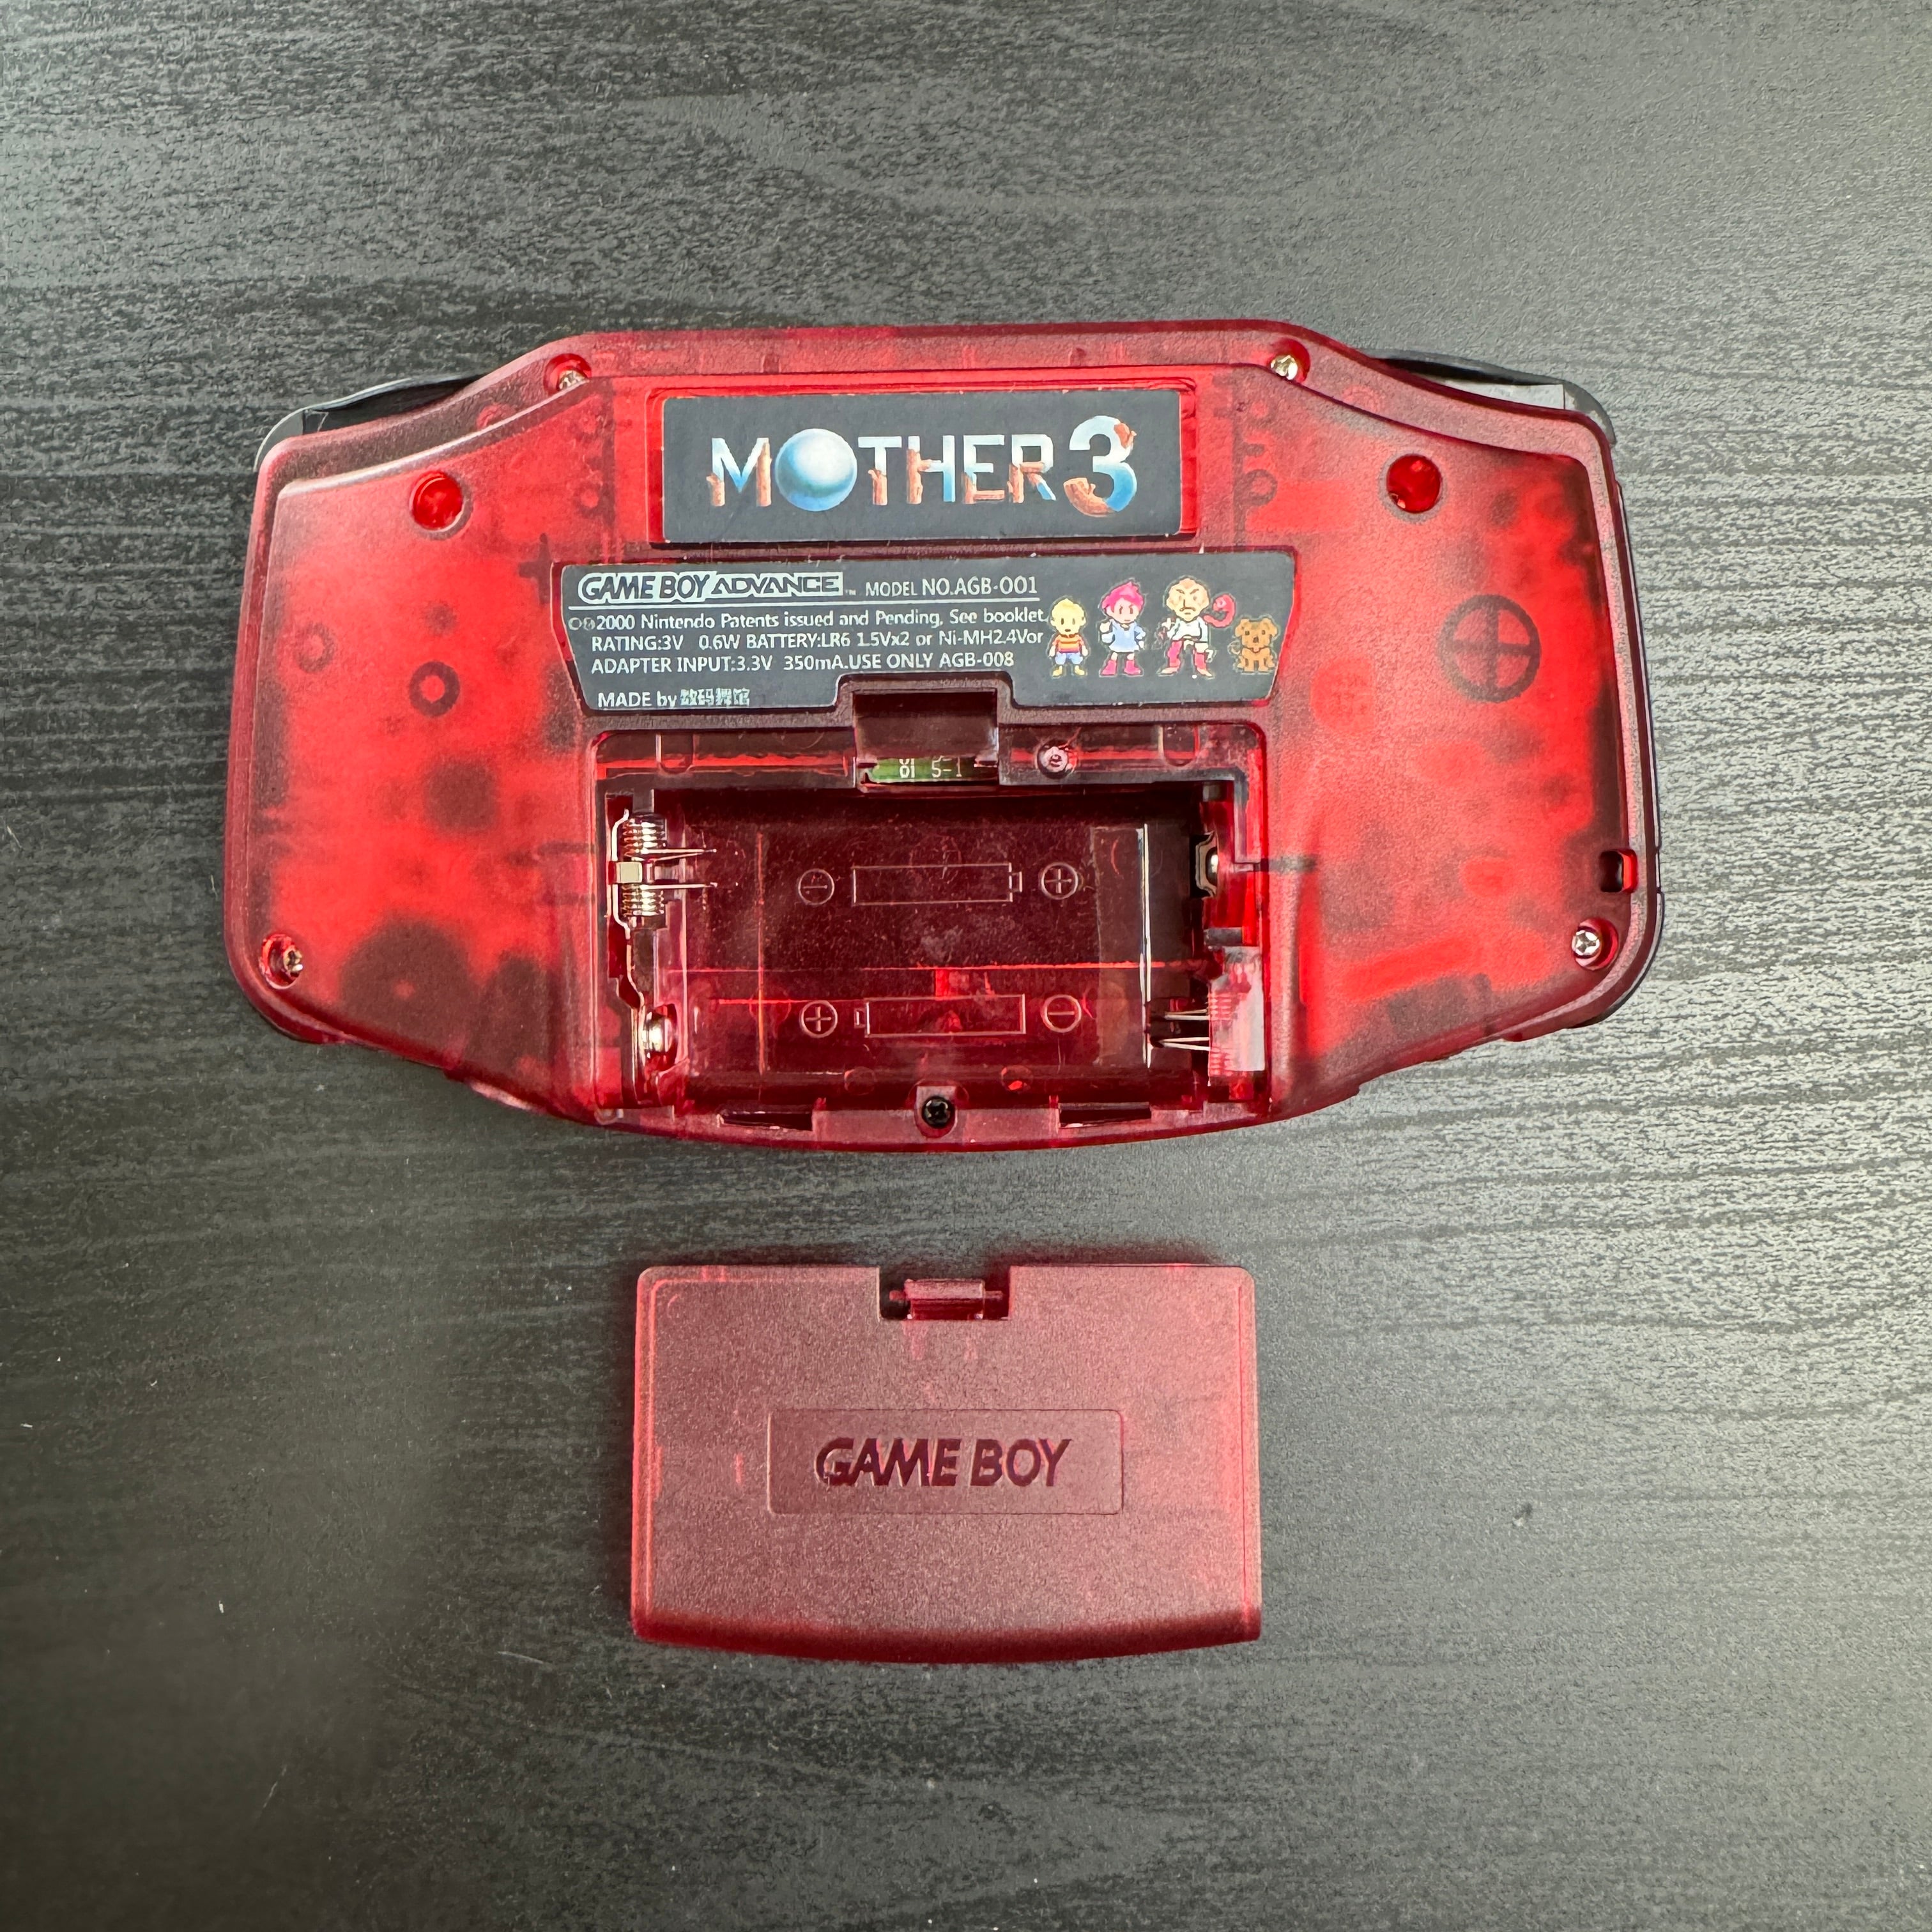 Modded Game Boy Advance W/ IPS V2 Screen (Mother 3 w/ Box)